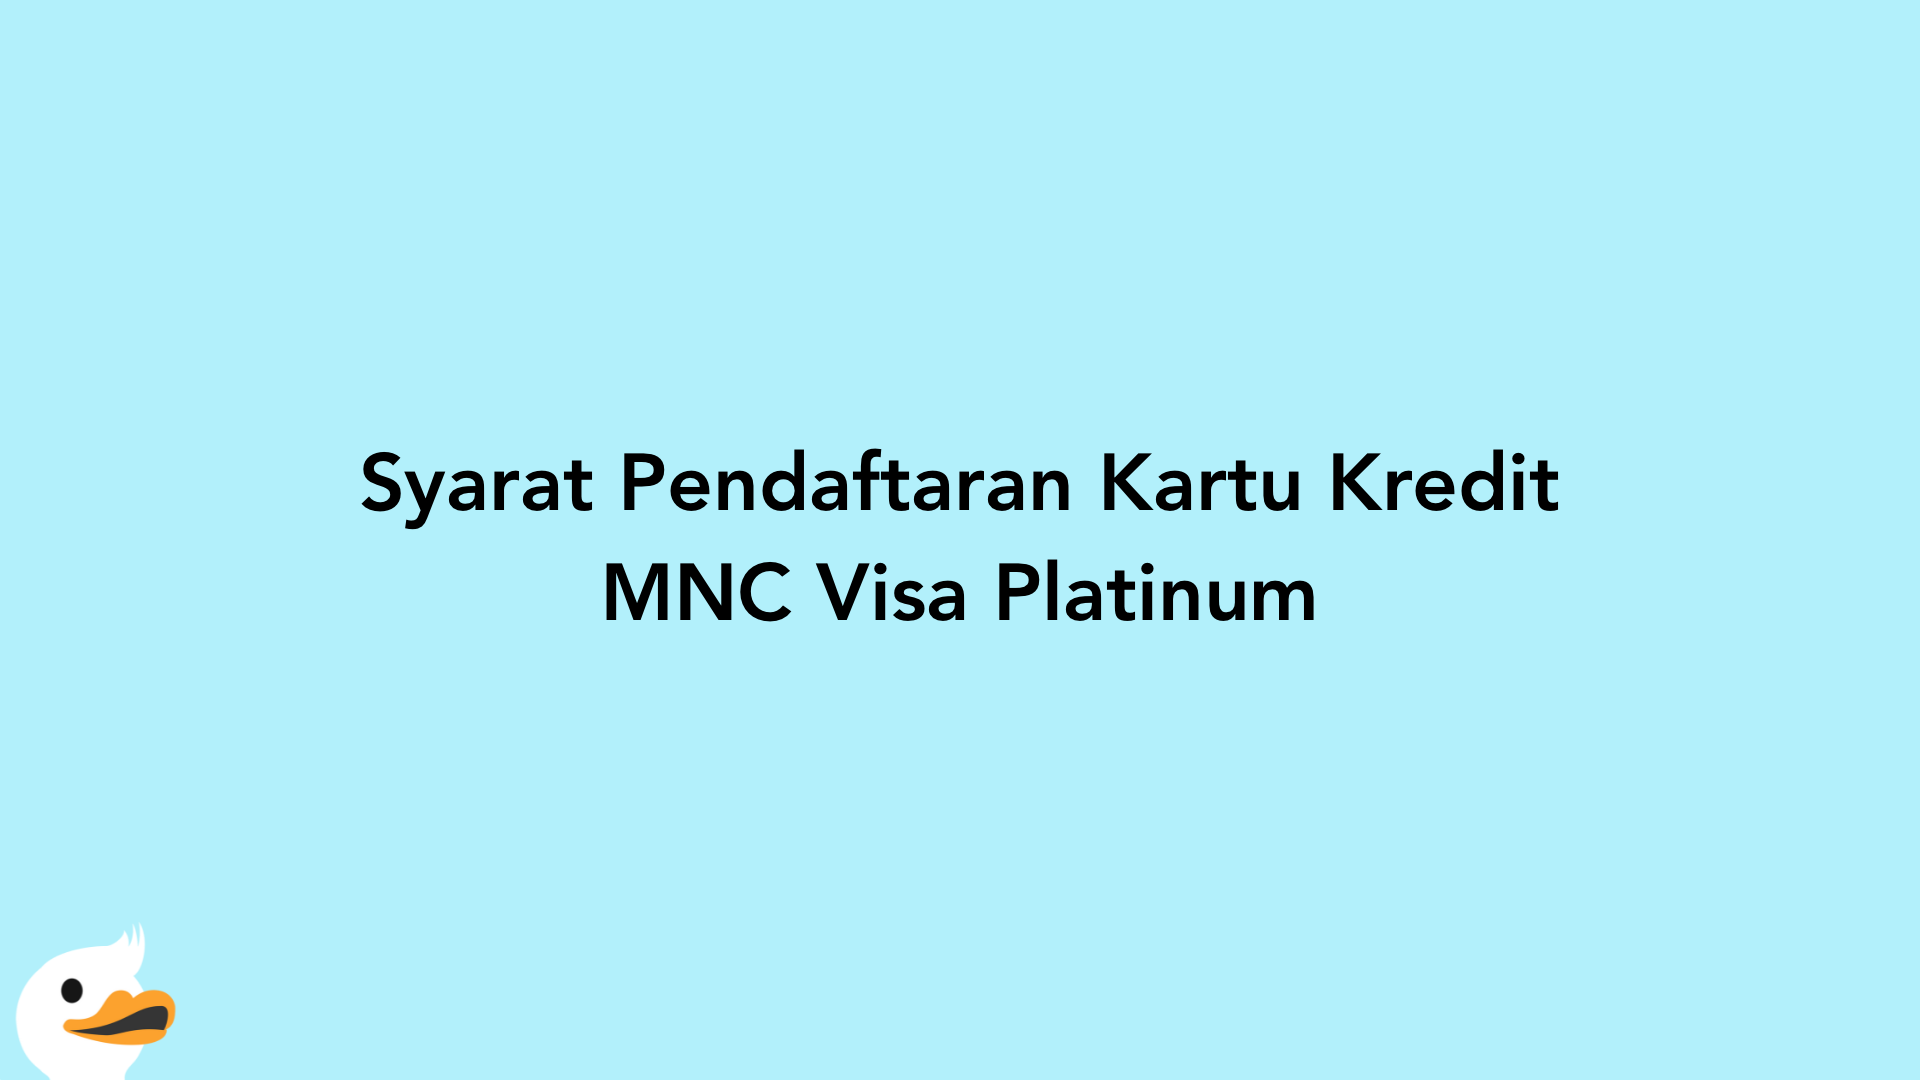 Syarat Pendaftaran Kartu Kredit MNC Visa Platinum